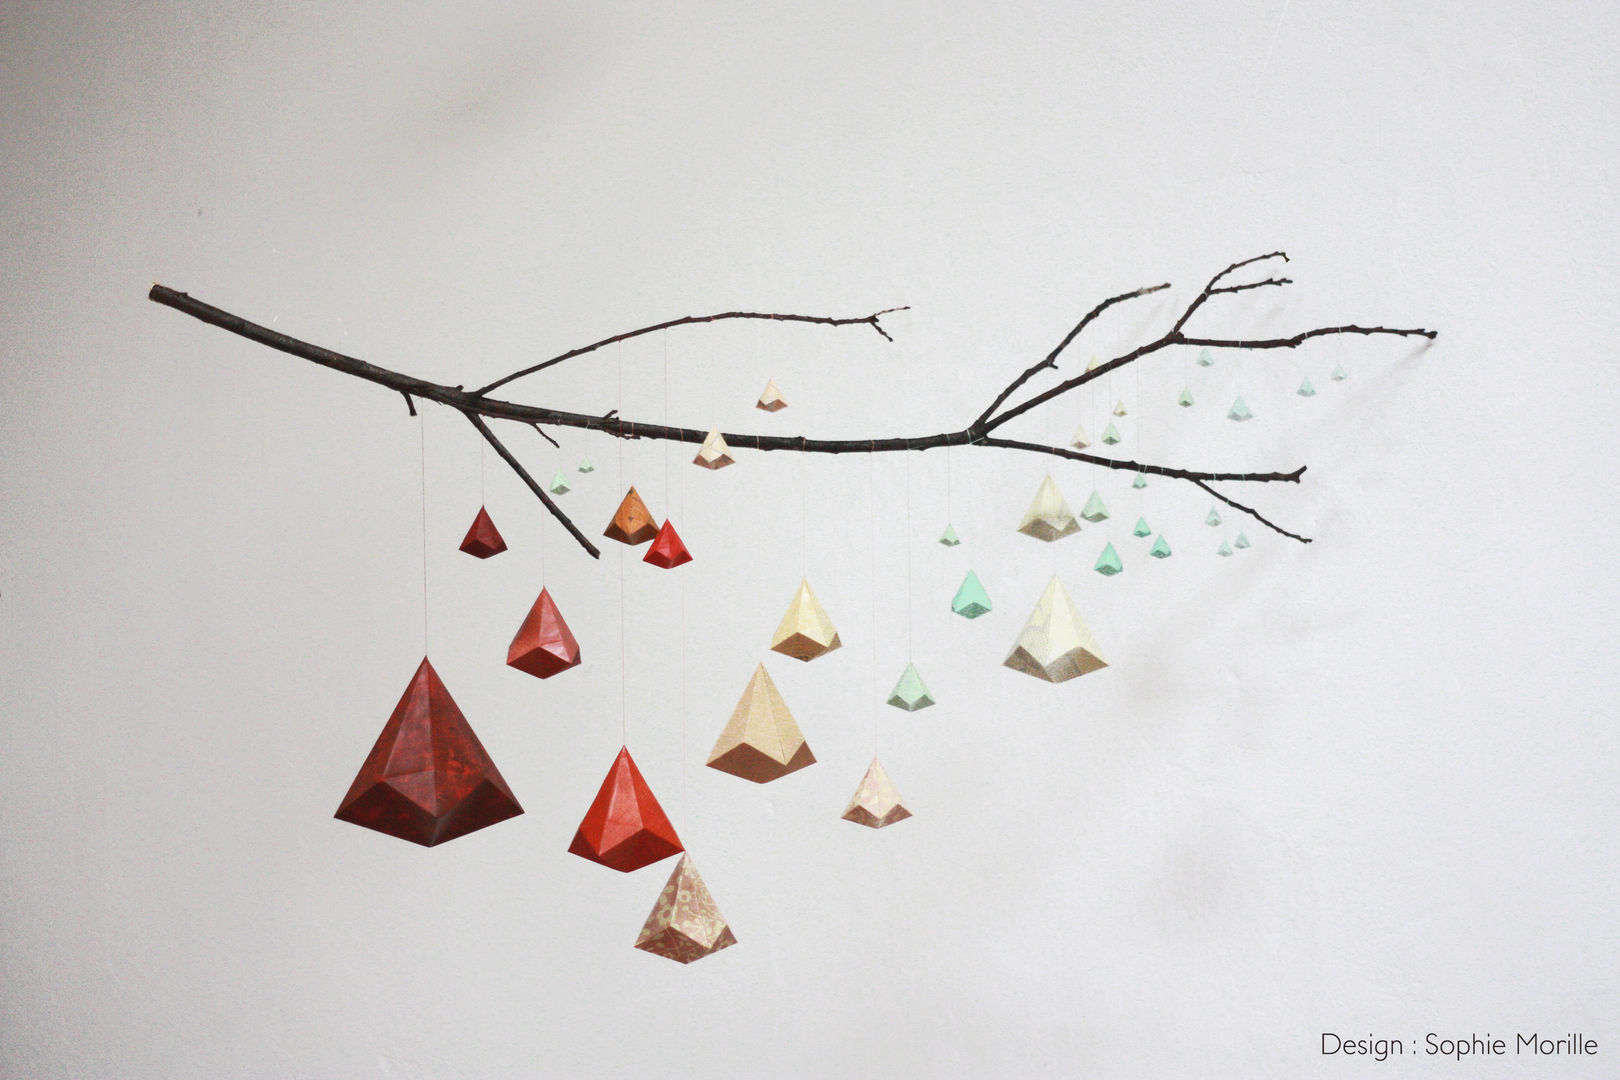 " Objets à rêves" en origami, Sophie Morille Designer Textile Sophie Morille Designer Textile غرف اخرى قطع فنية آخرى